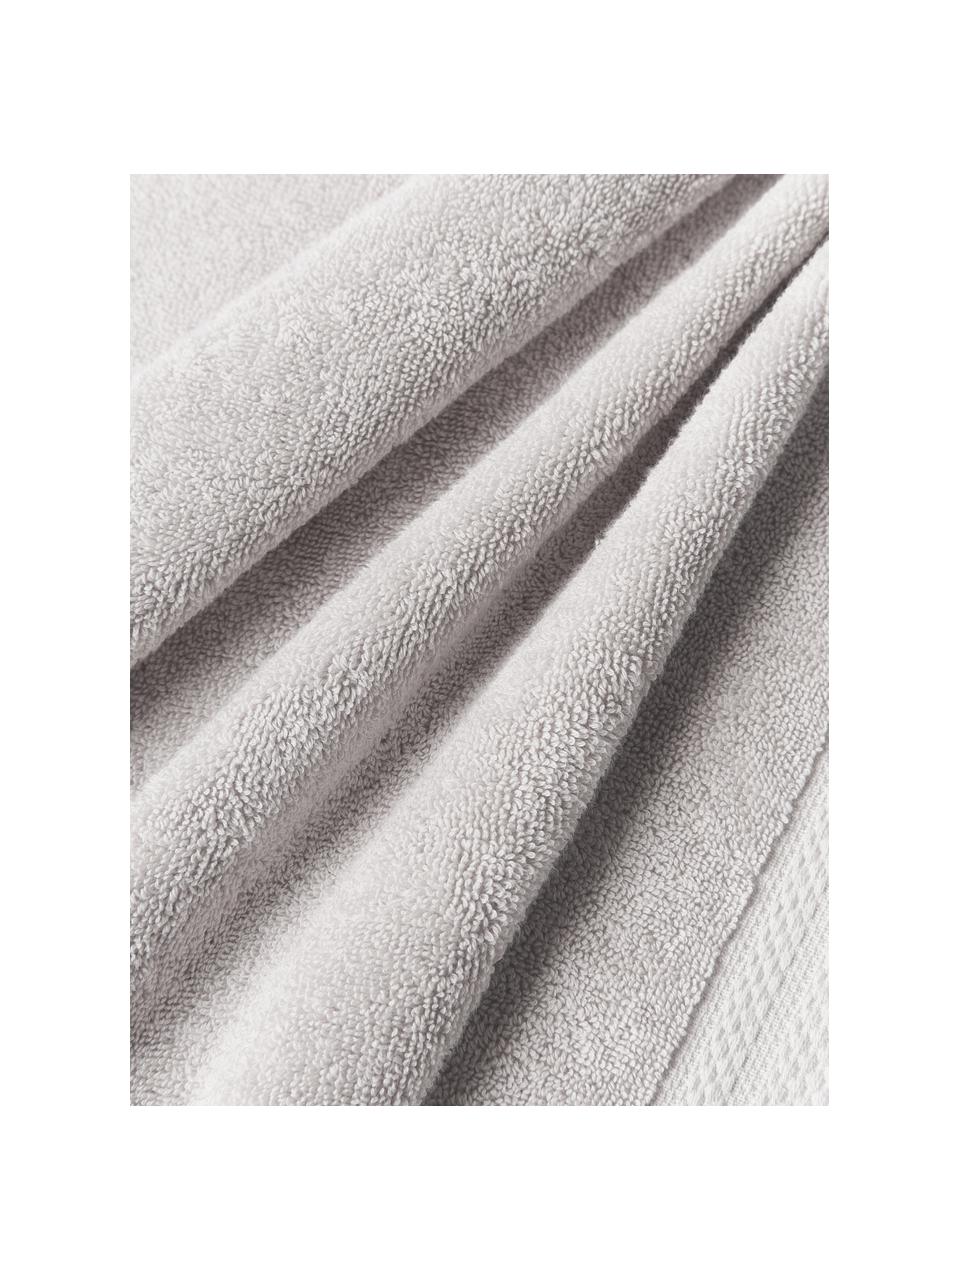 Set asciugamani in cotone organico Premium, varie misure, 100% cotone organico certificato GOTS (da GCL International, GCL-300517).
Qualità pesante, 600 g/m², Grigio chiaro, Set da 3 (asciugamano ospite, asciugamano e telo bagno)